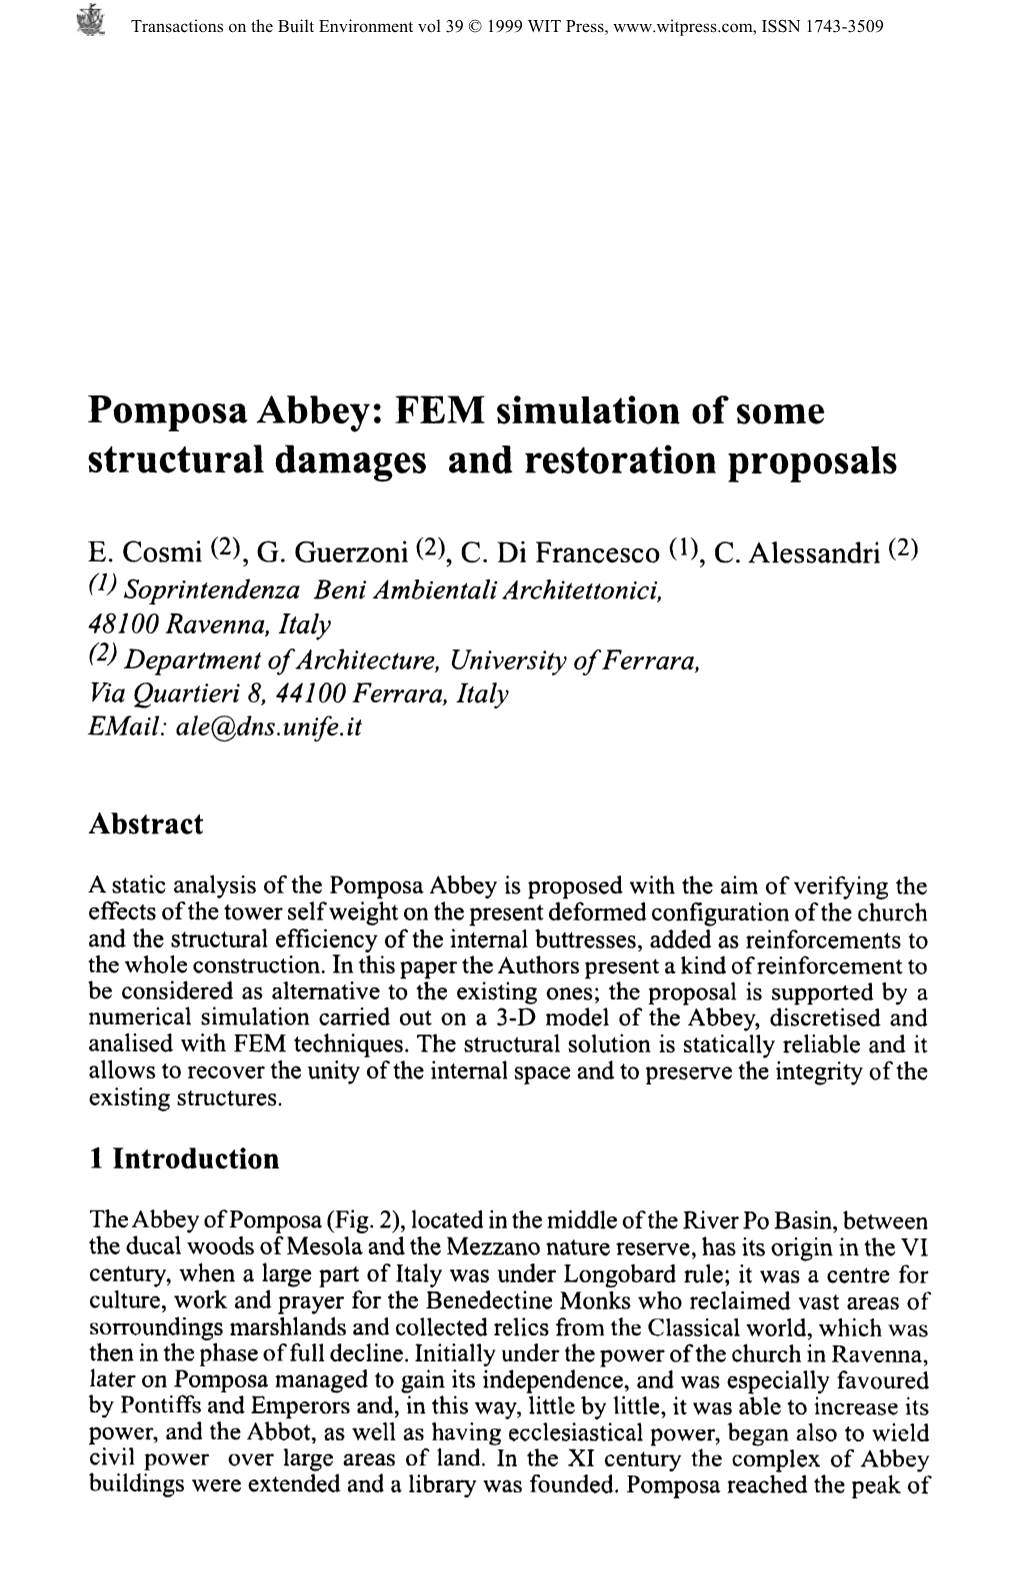 Pomposa Abbey: FEM Simulation of Some Structural Damages and Restoration Proposals